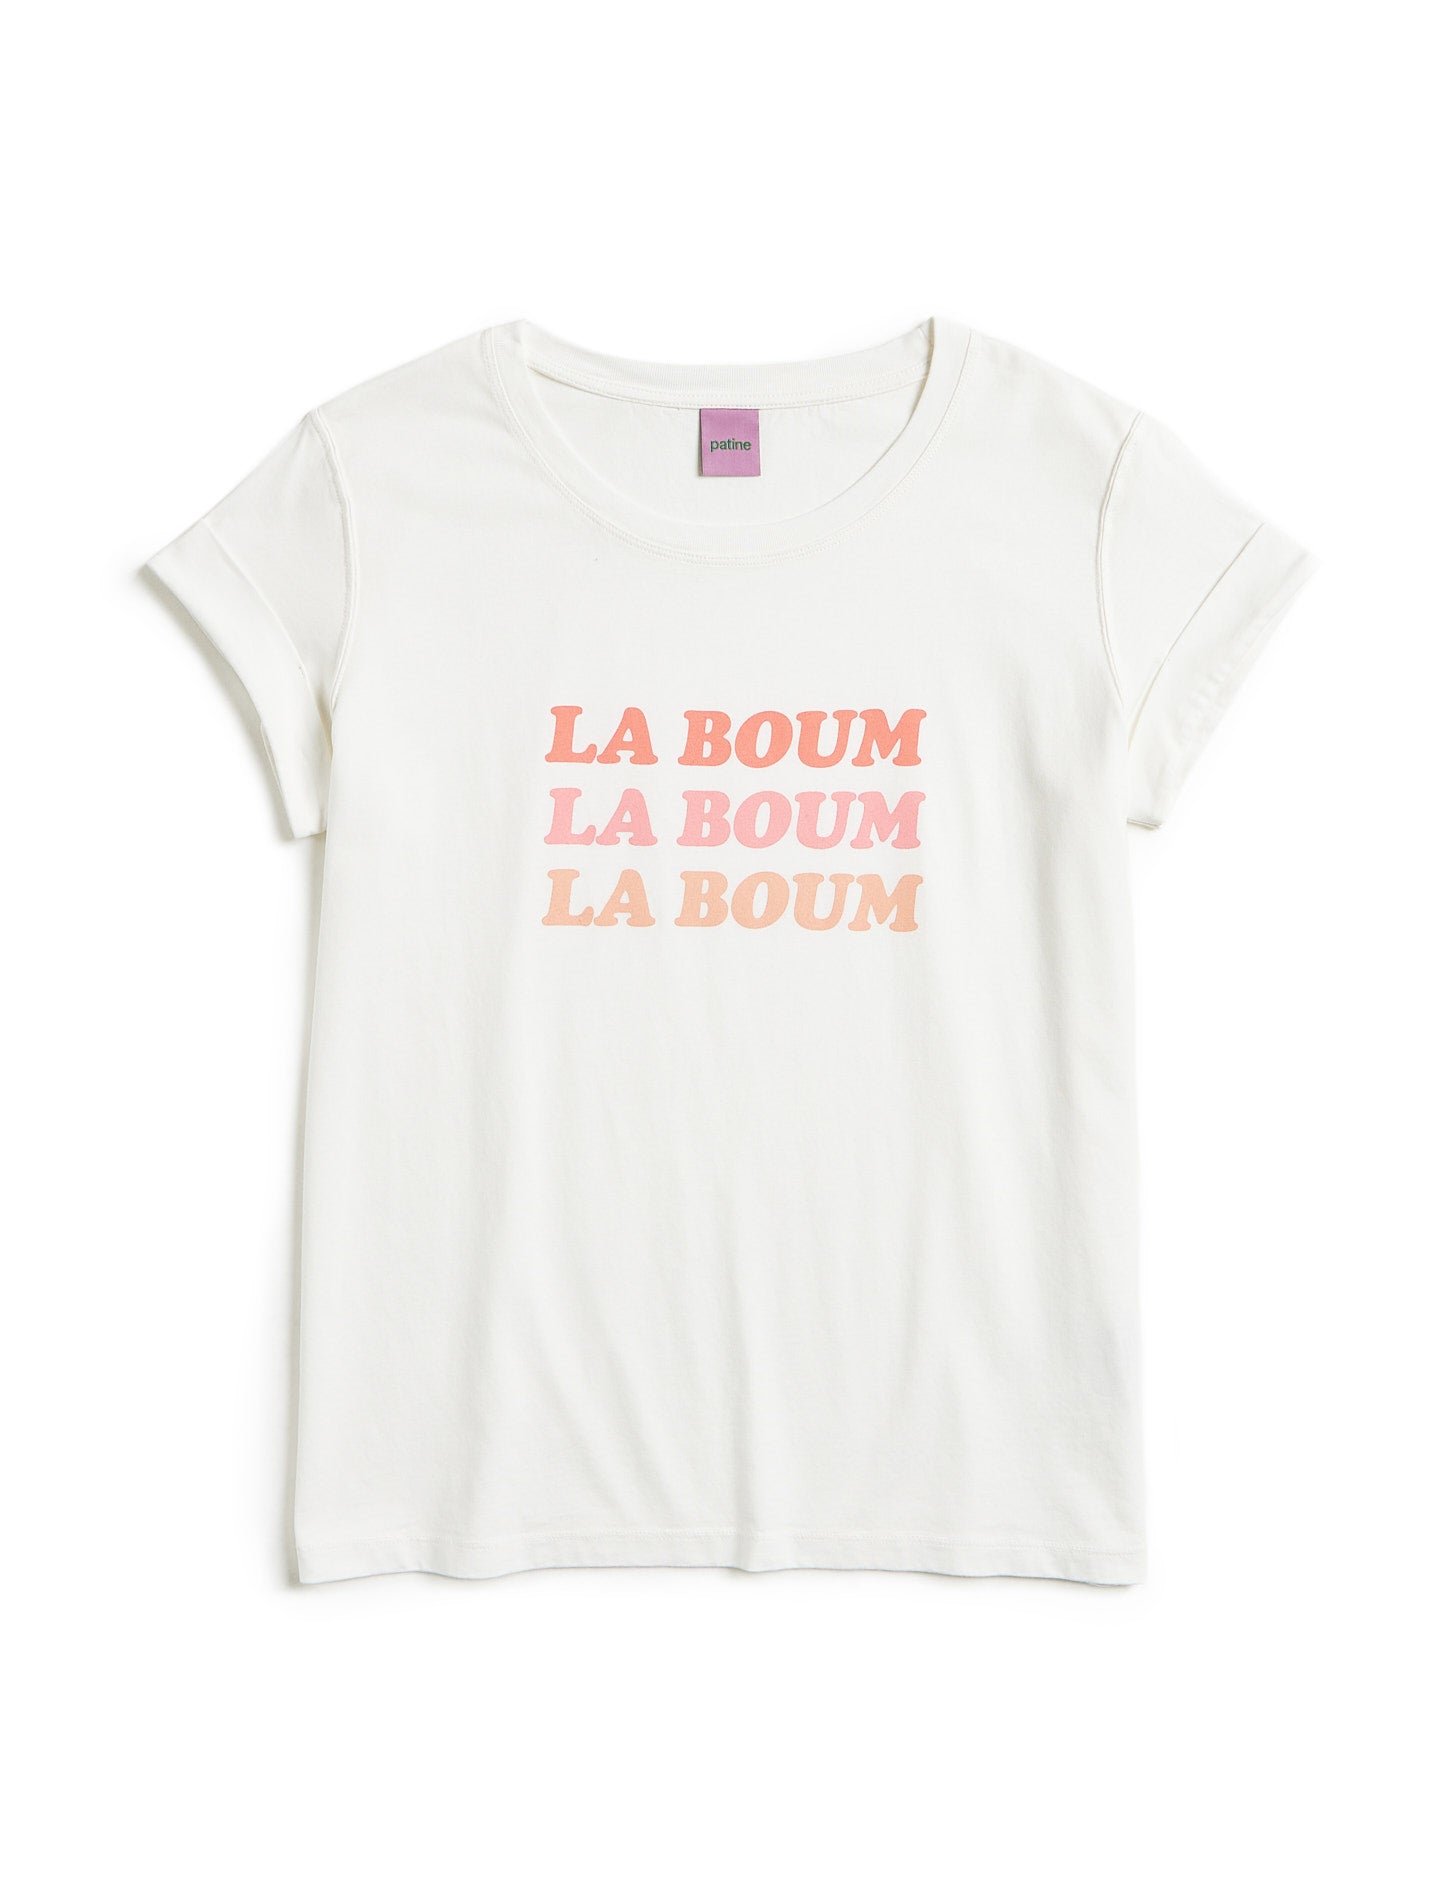 Le tee-shirt Cool Willie® jersey bio-recyclé La Boum Blanc cheesecake